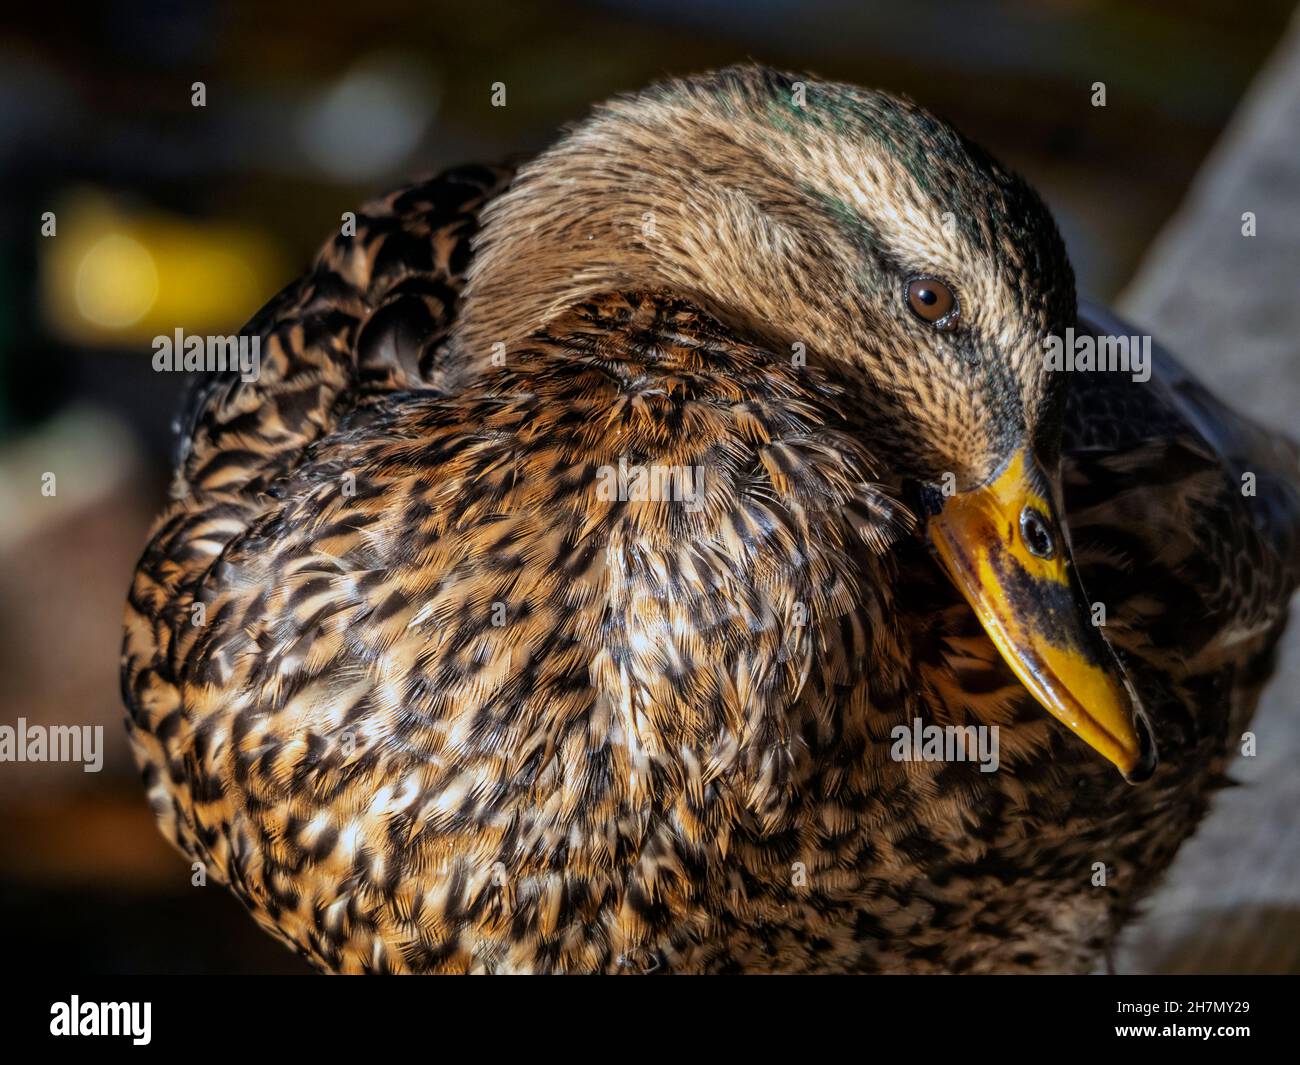 Mallard duck, or wild duck, female close up Stock Photo